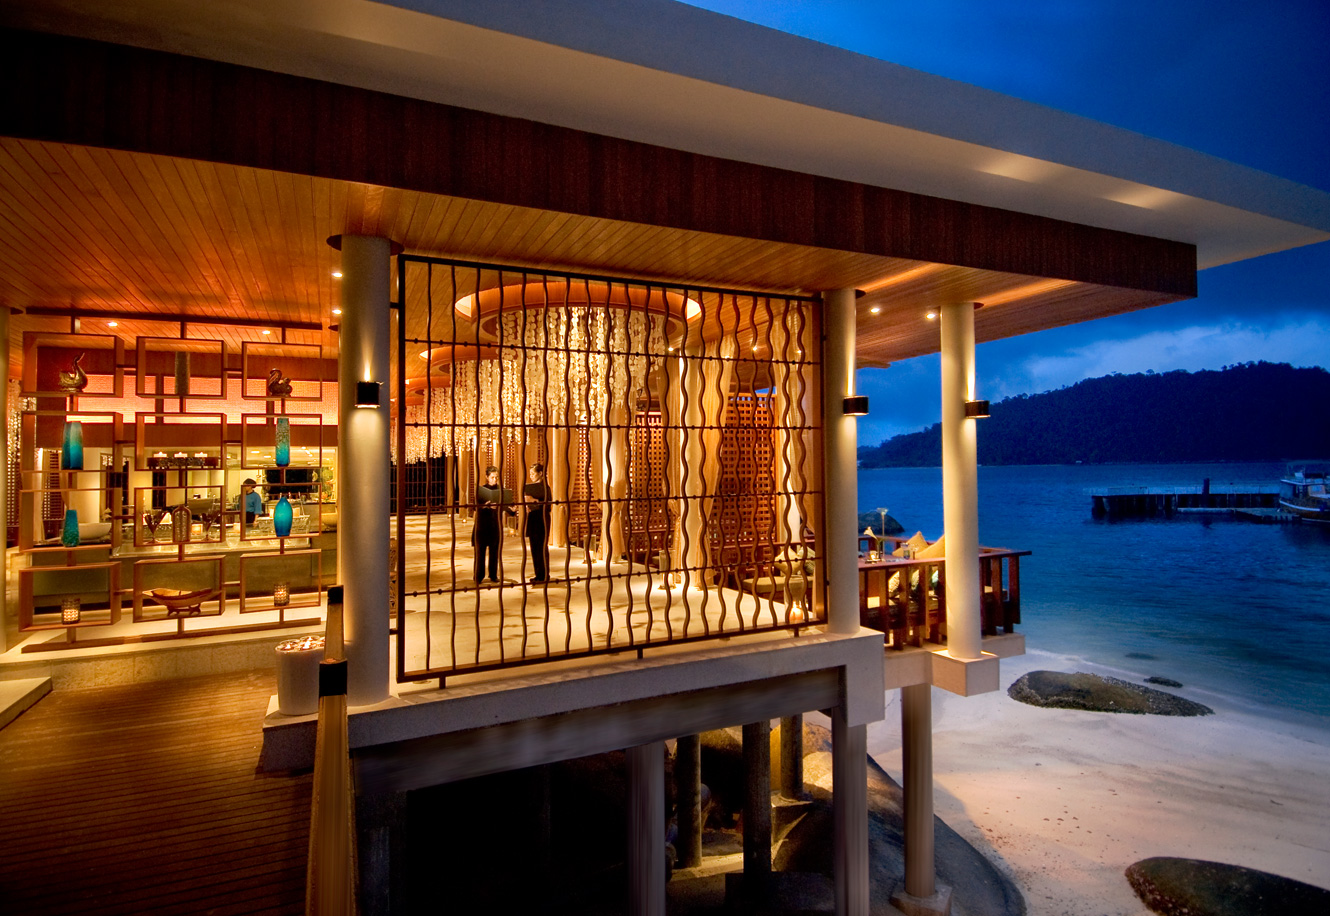 pangkor laut resort YTL Hospitality Trust 